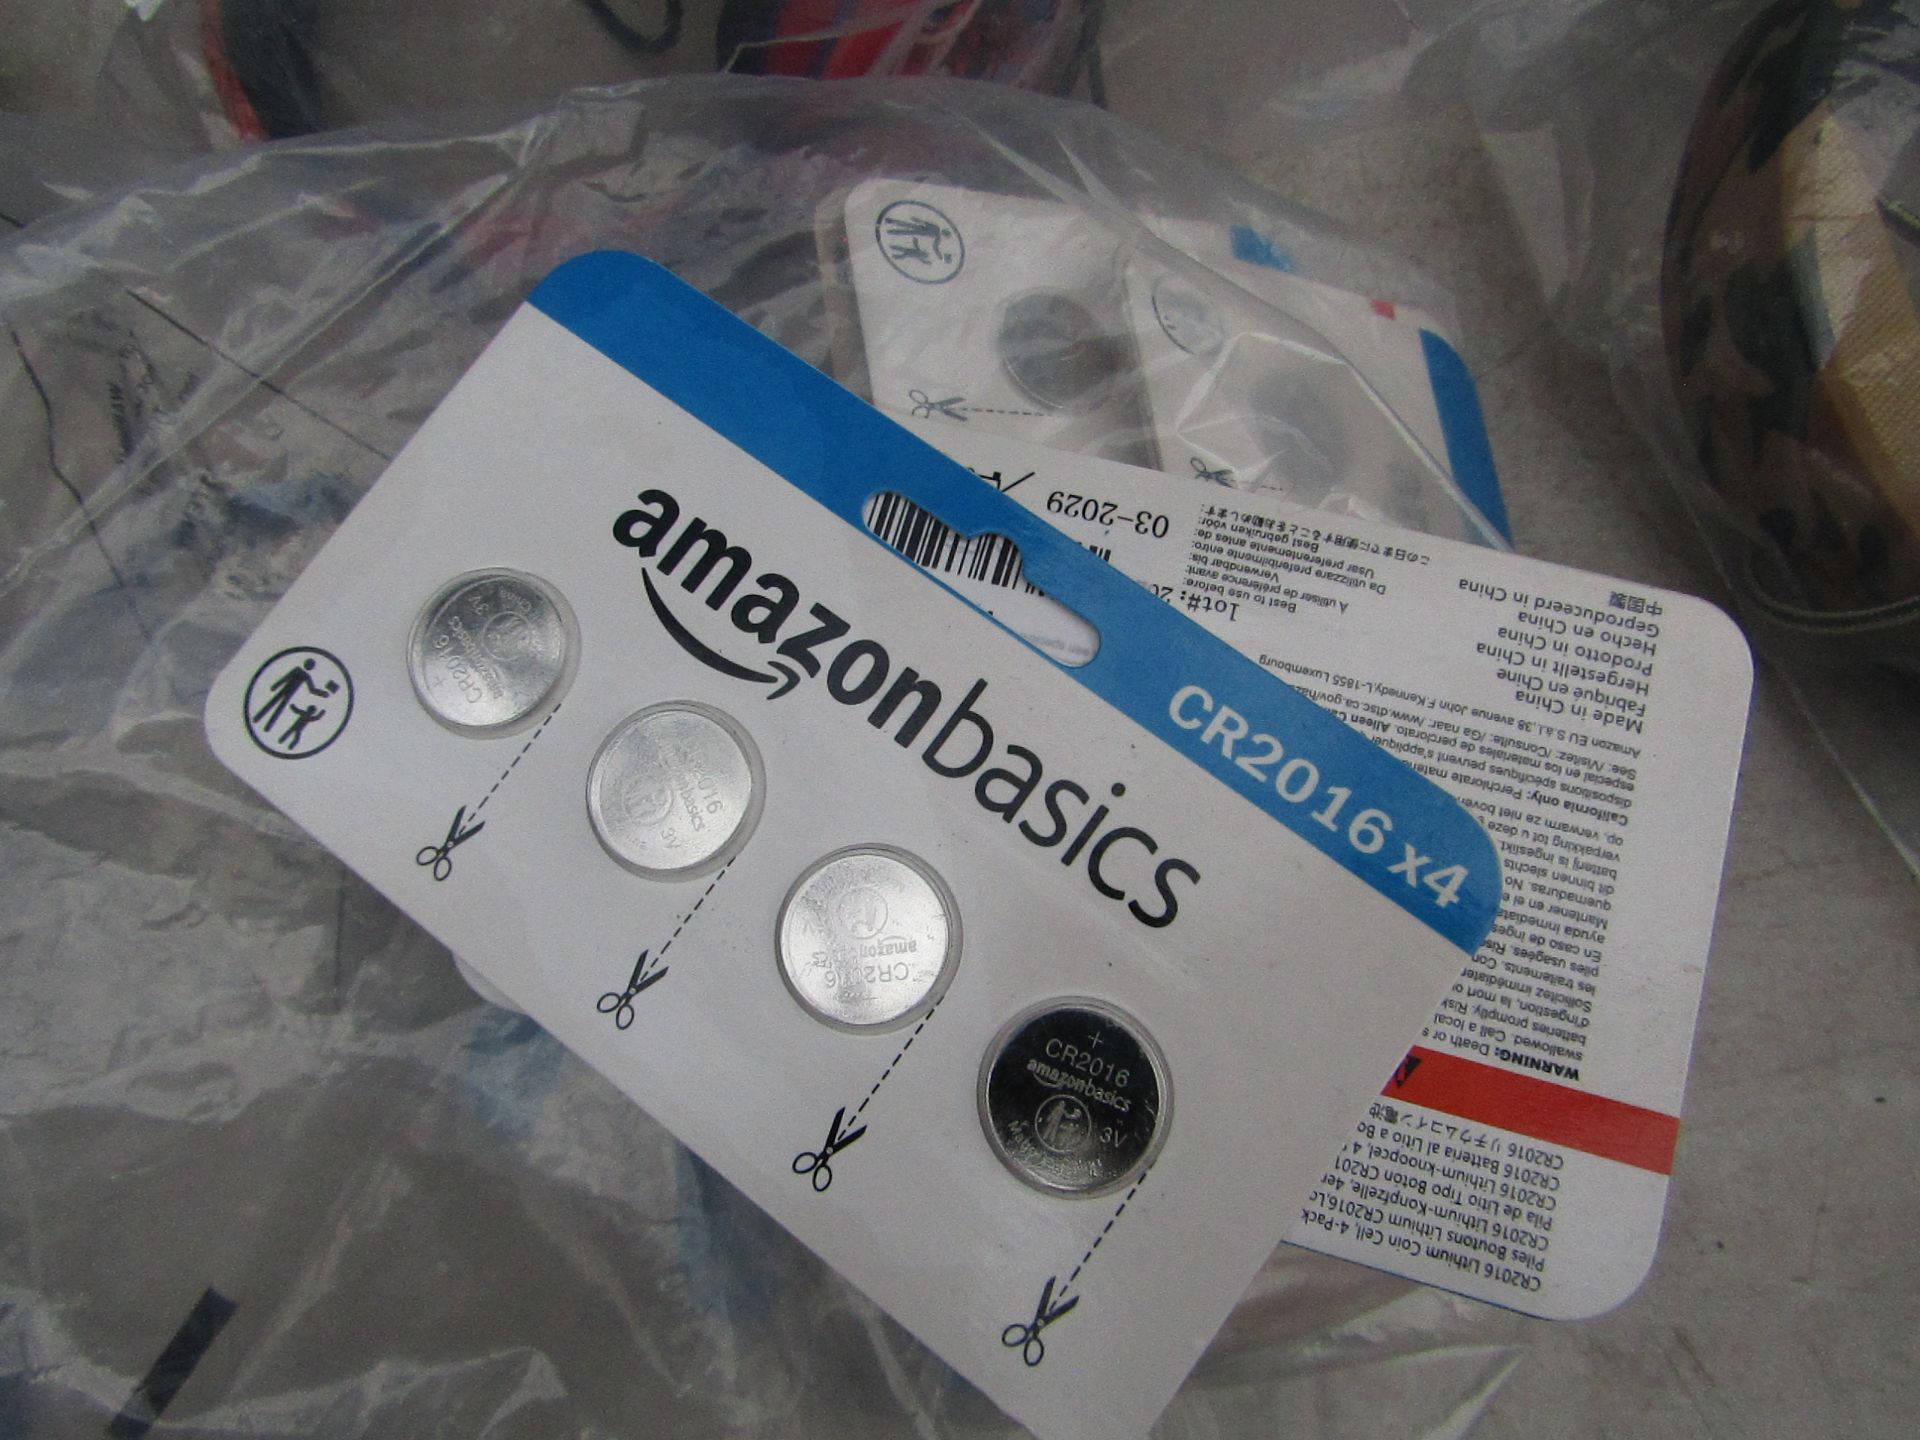 Bag Containing around 20x Amazon basic watch batteries